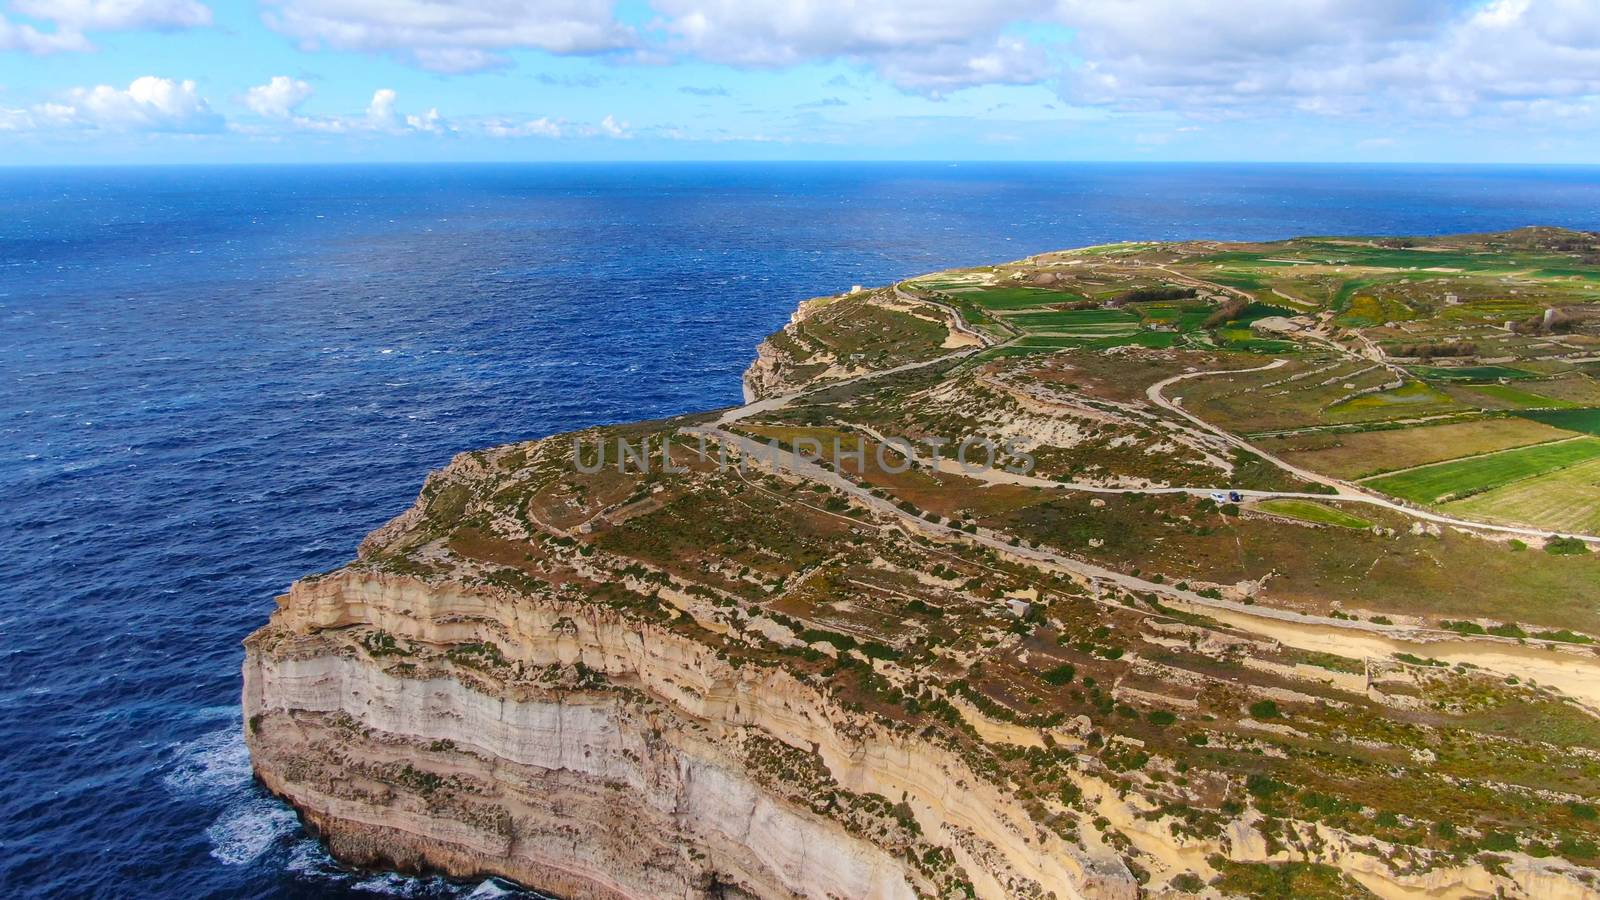 Wonderful coast line of Gozo Malta from above by Lattwein